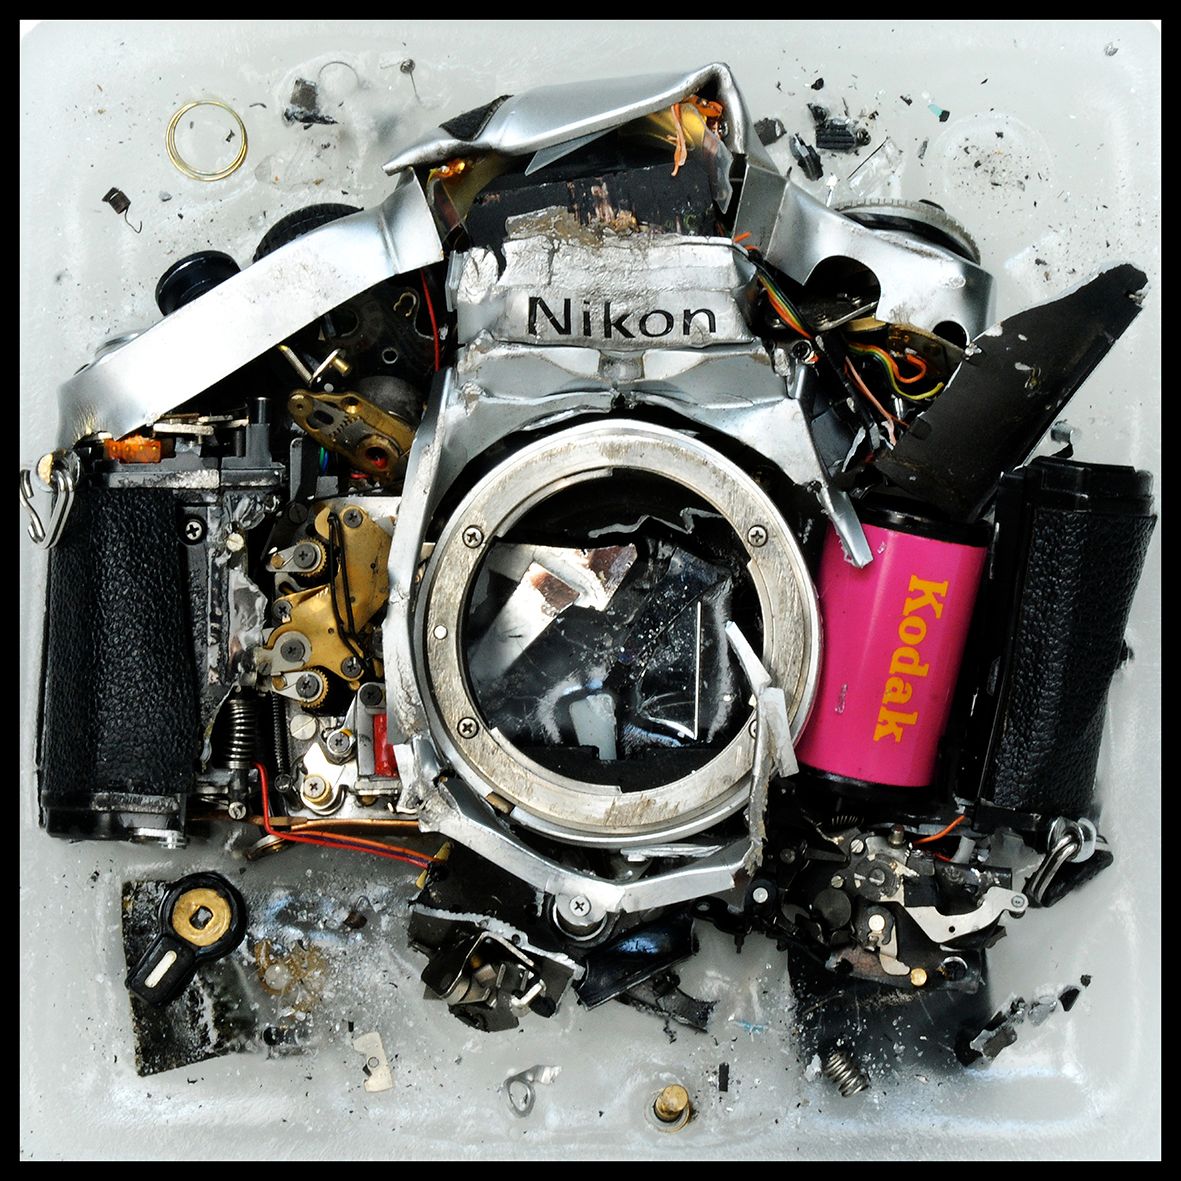 Nikon FE & Steamroller DSC_9133.jpg